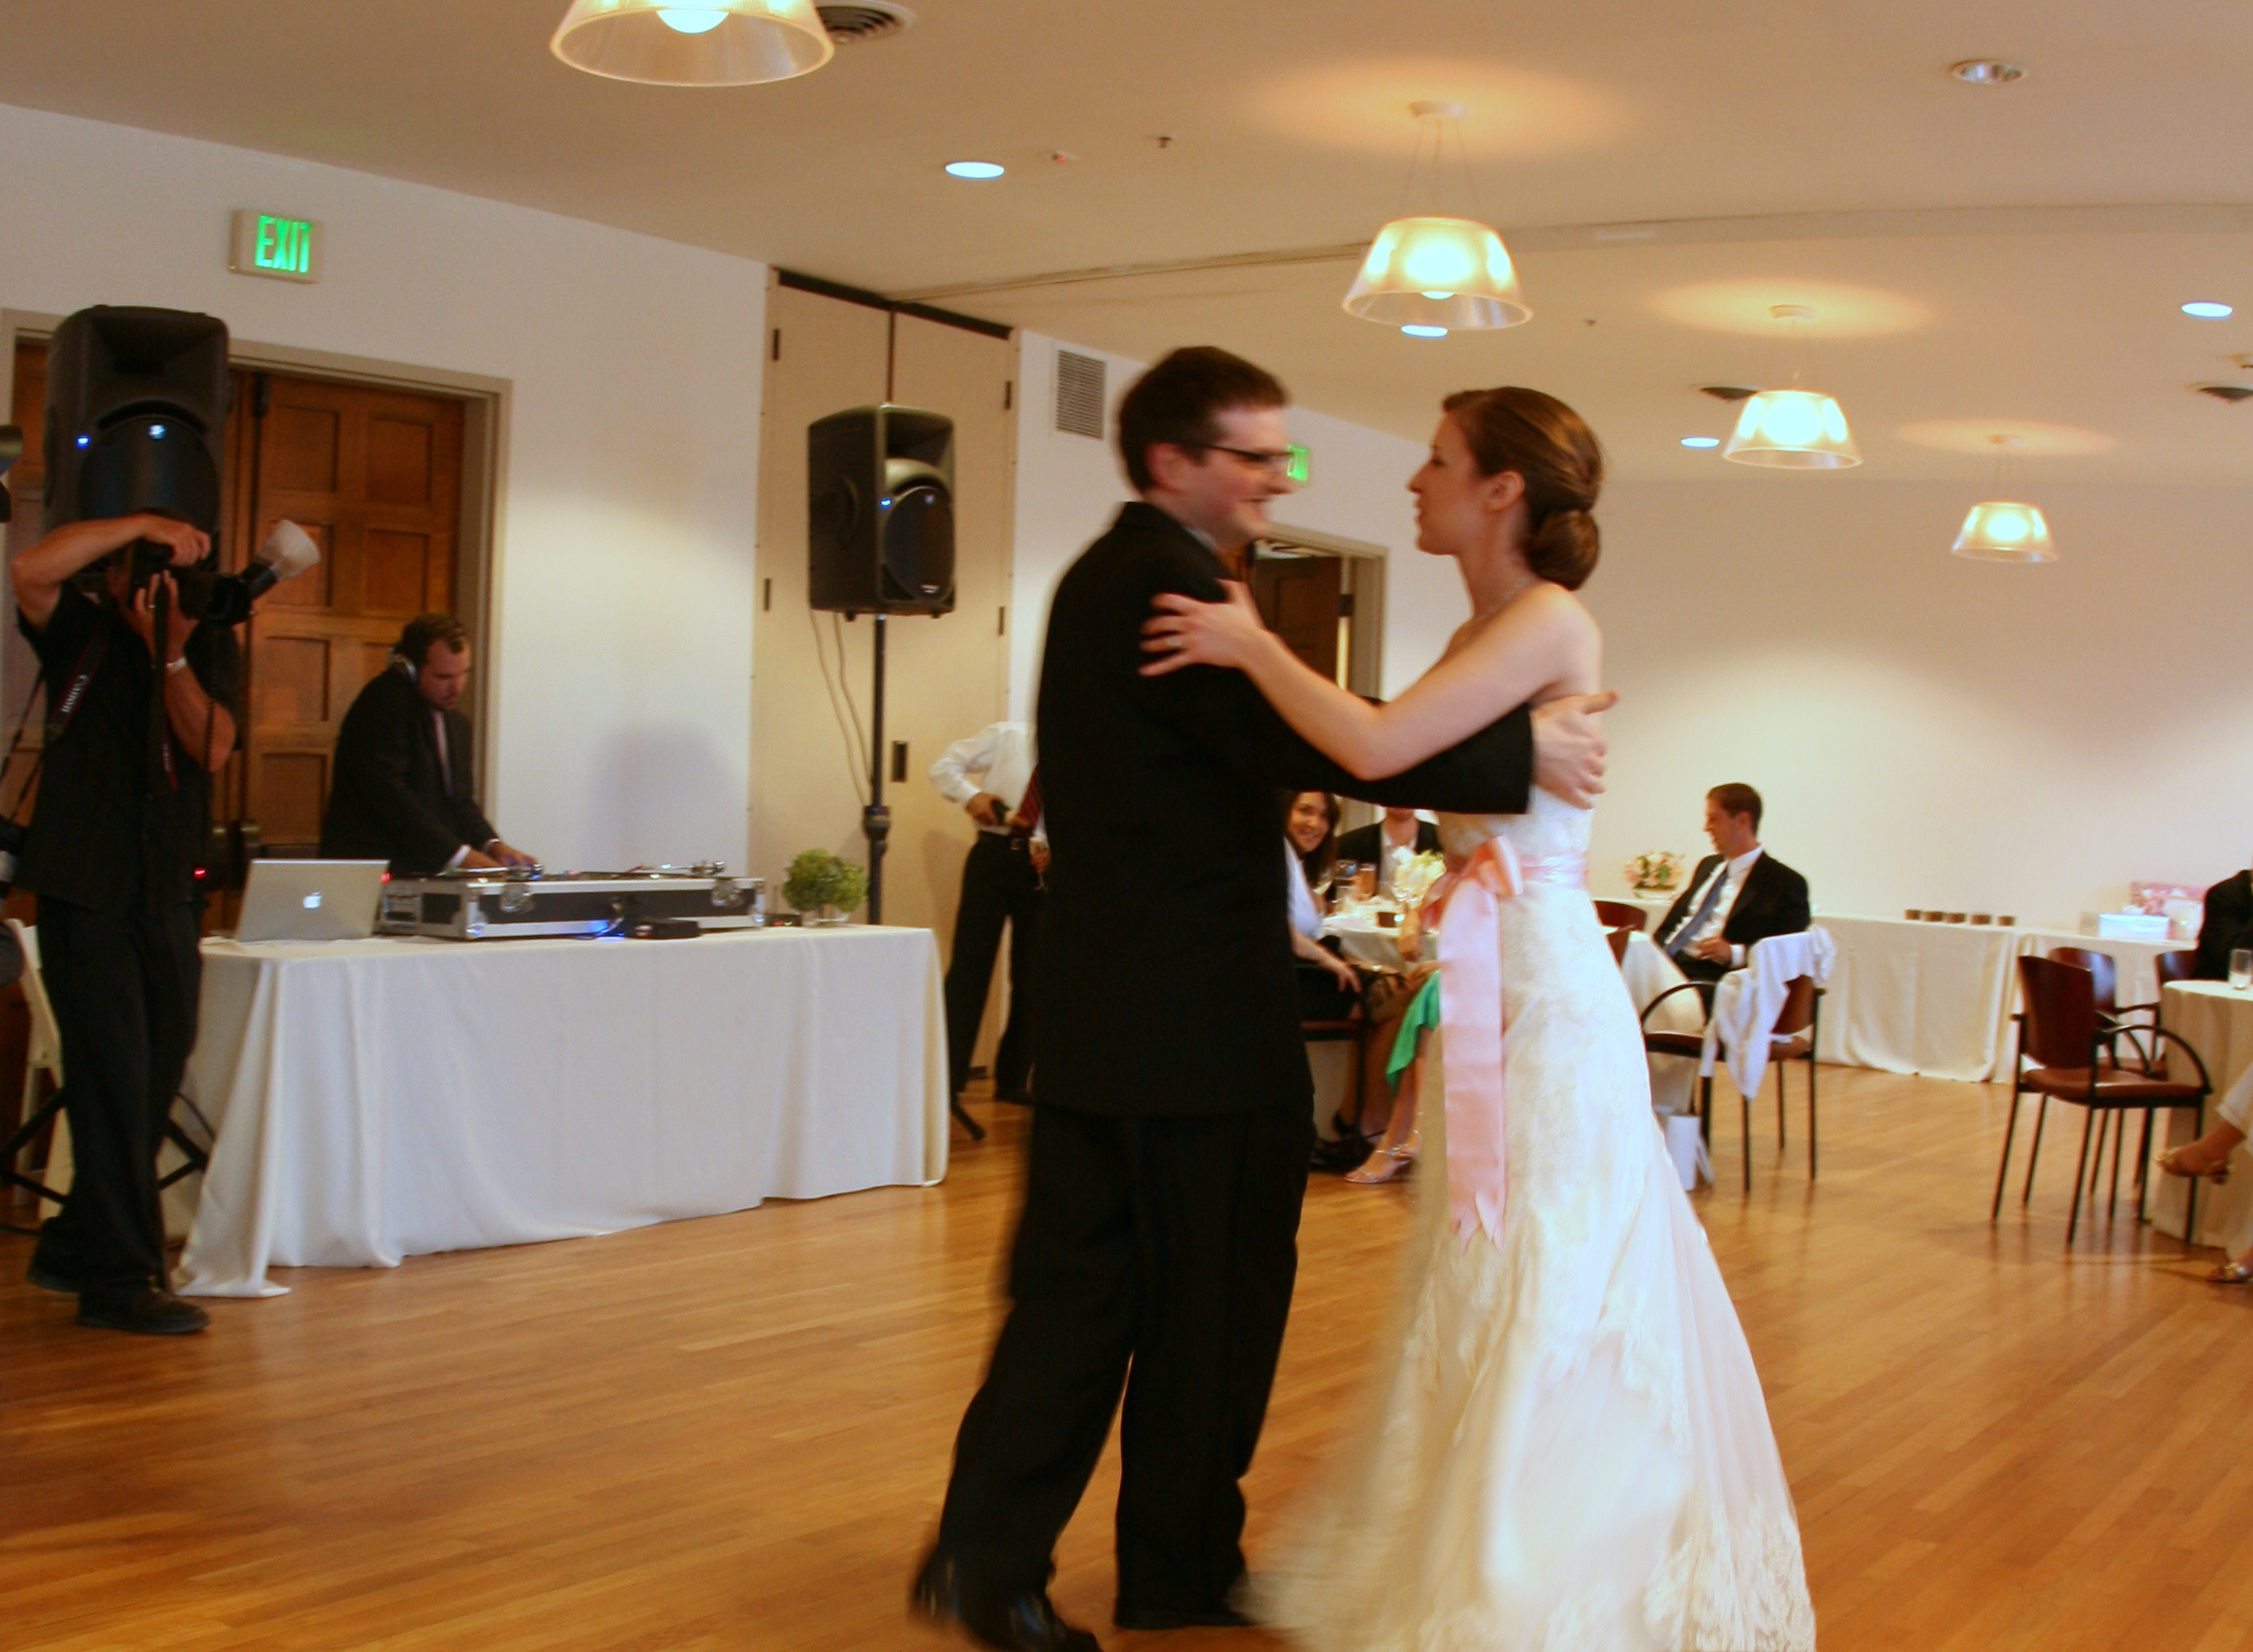 Steve and Emily's wedding dance 2